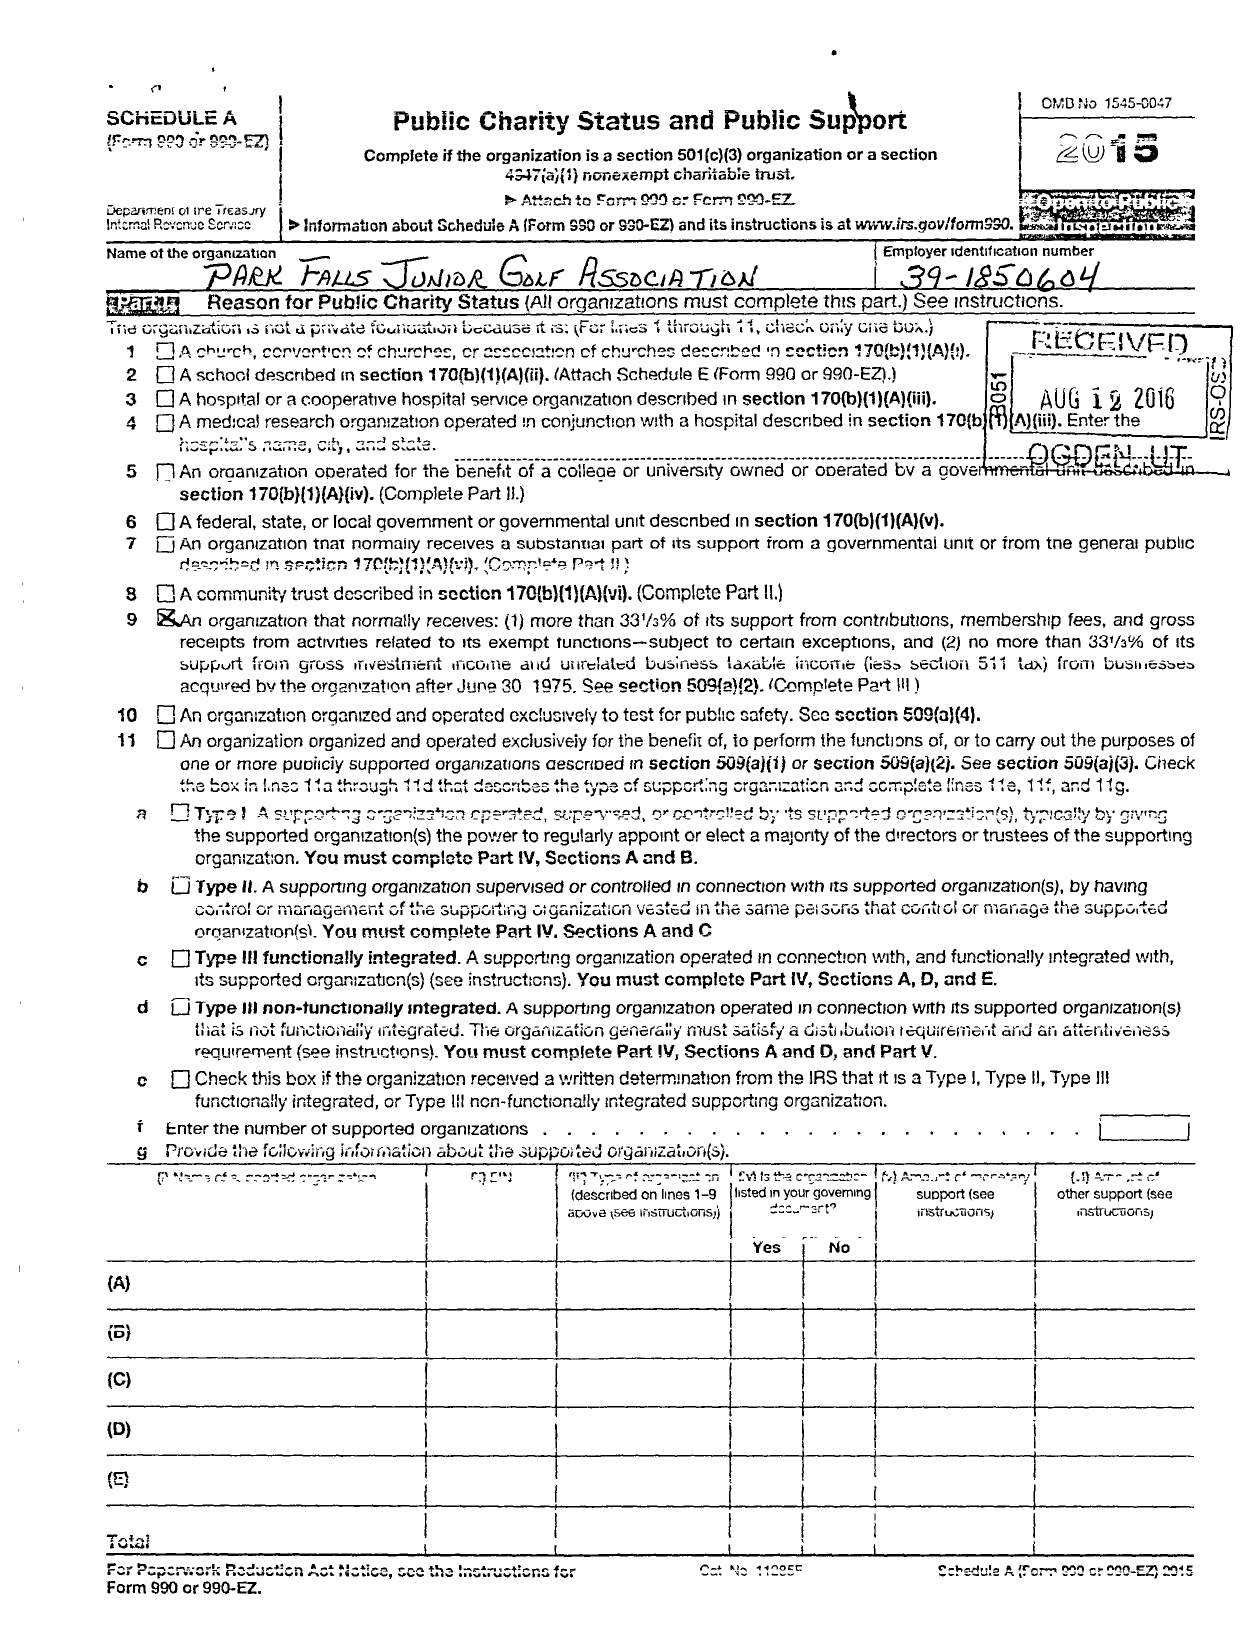 Image of first page of 2015 Form 990ER for PARK FALLS JUNIoR GOLF ASSOCIATION